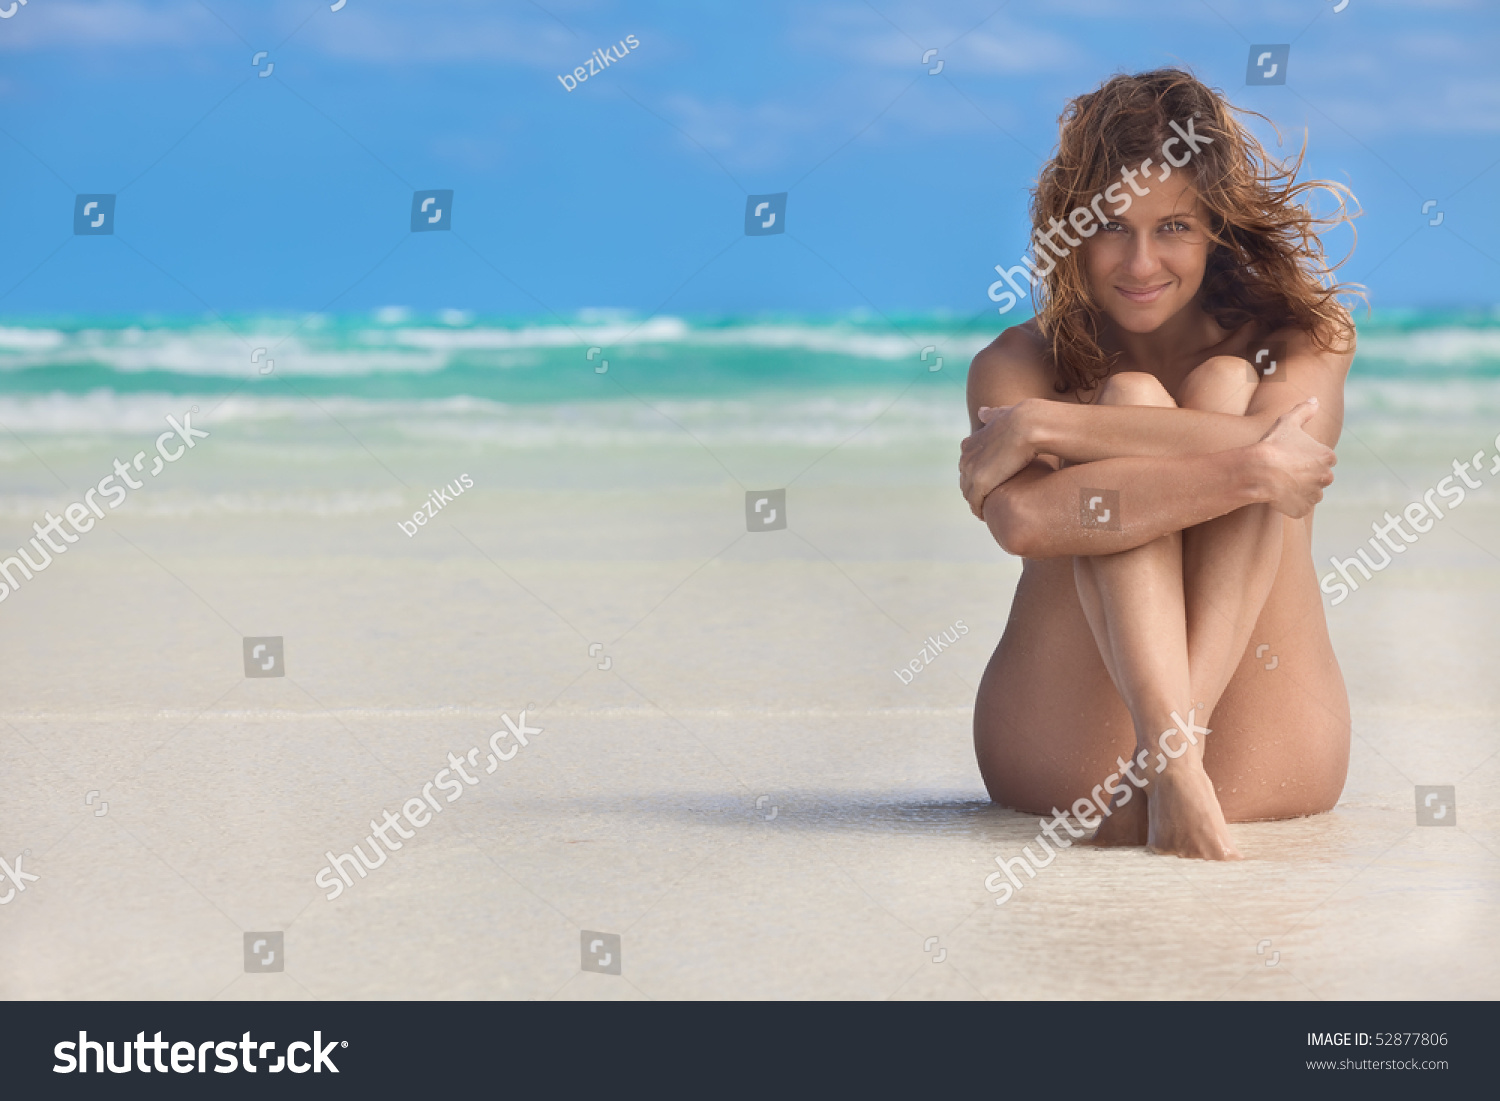 nudist beach image gallery video gallerie photo